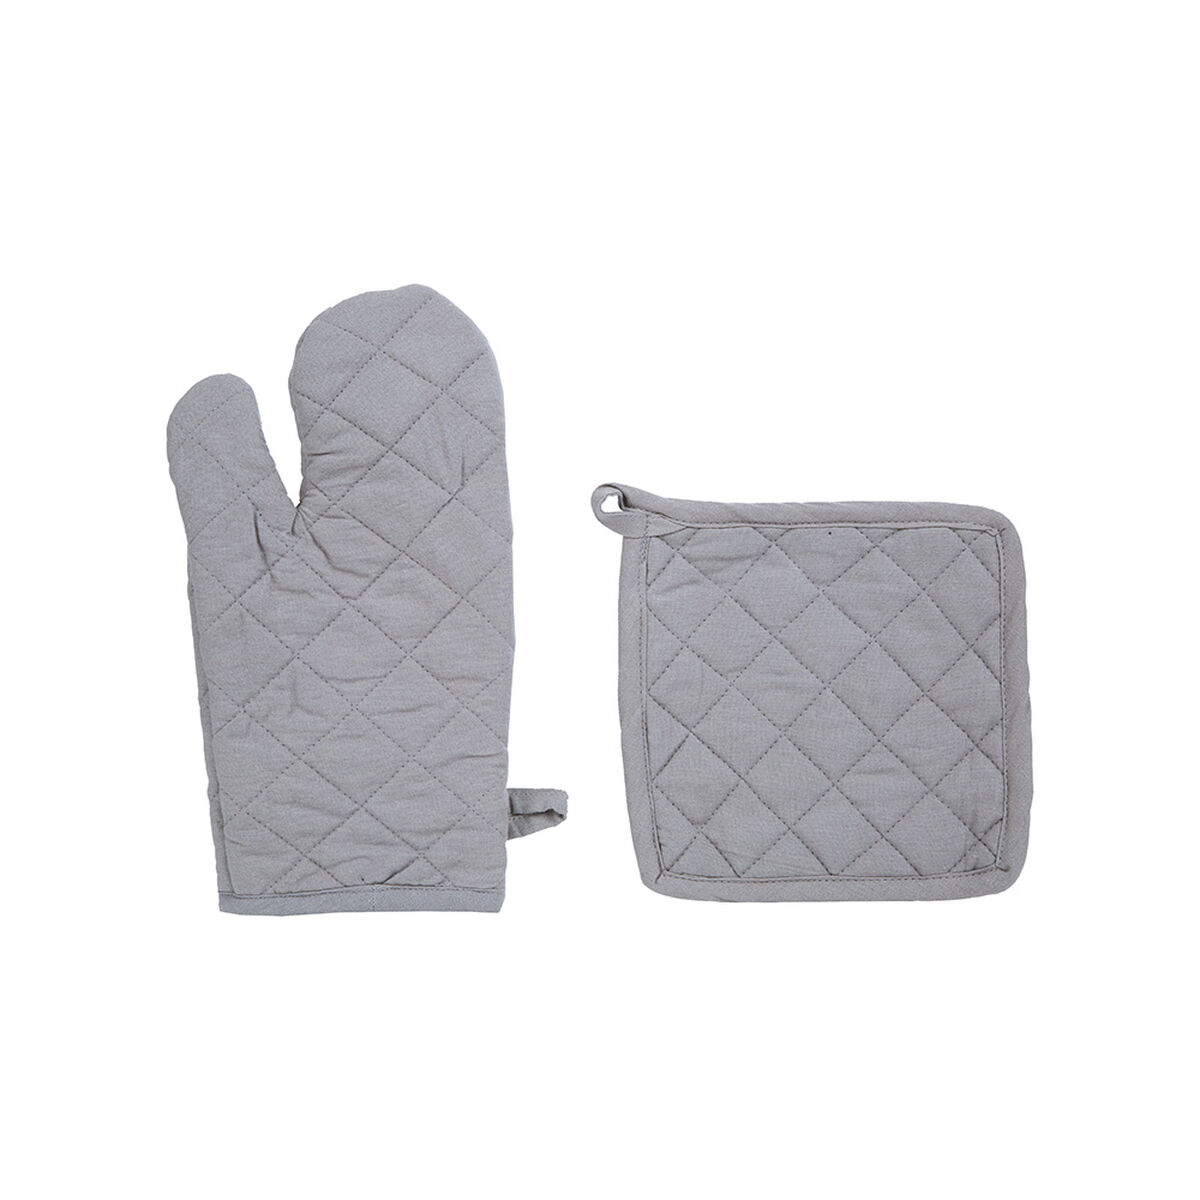 Oven Gloves and Pot Holder Set Atmosphera Grey Cotton